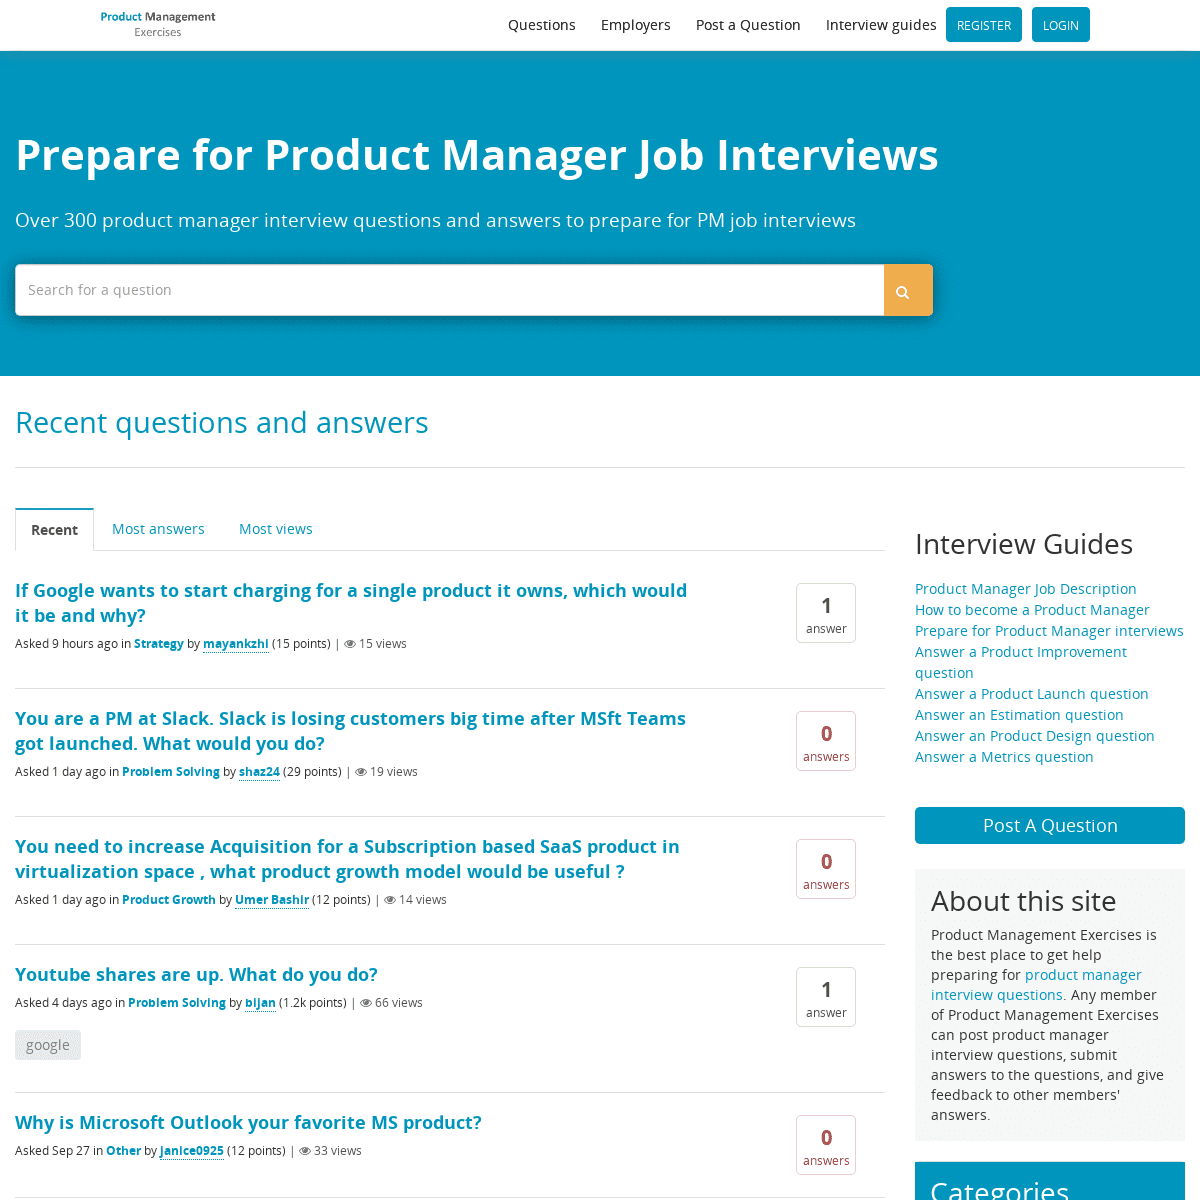 A complete backup of productmanagementexercises.com